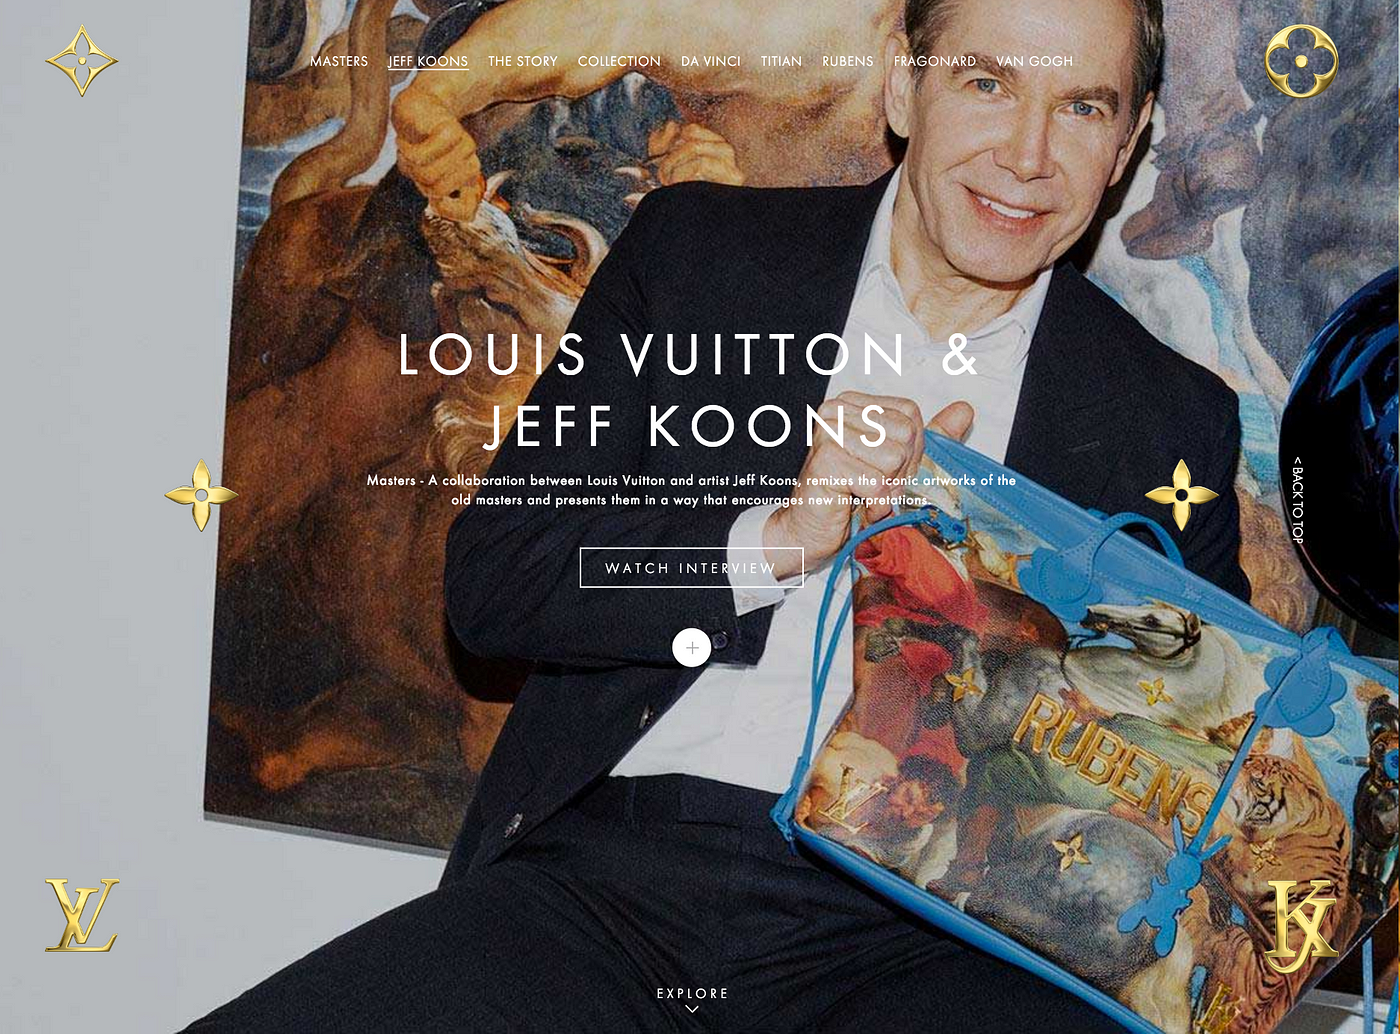 Louis Vuitton x Jeff Koons, Mona Lisa Has Own Handbags, by Xuyuner Qi